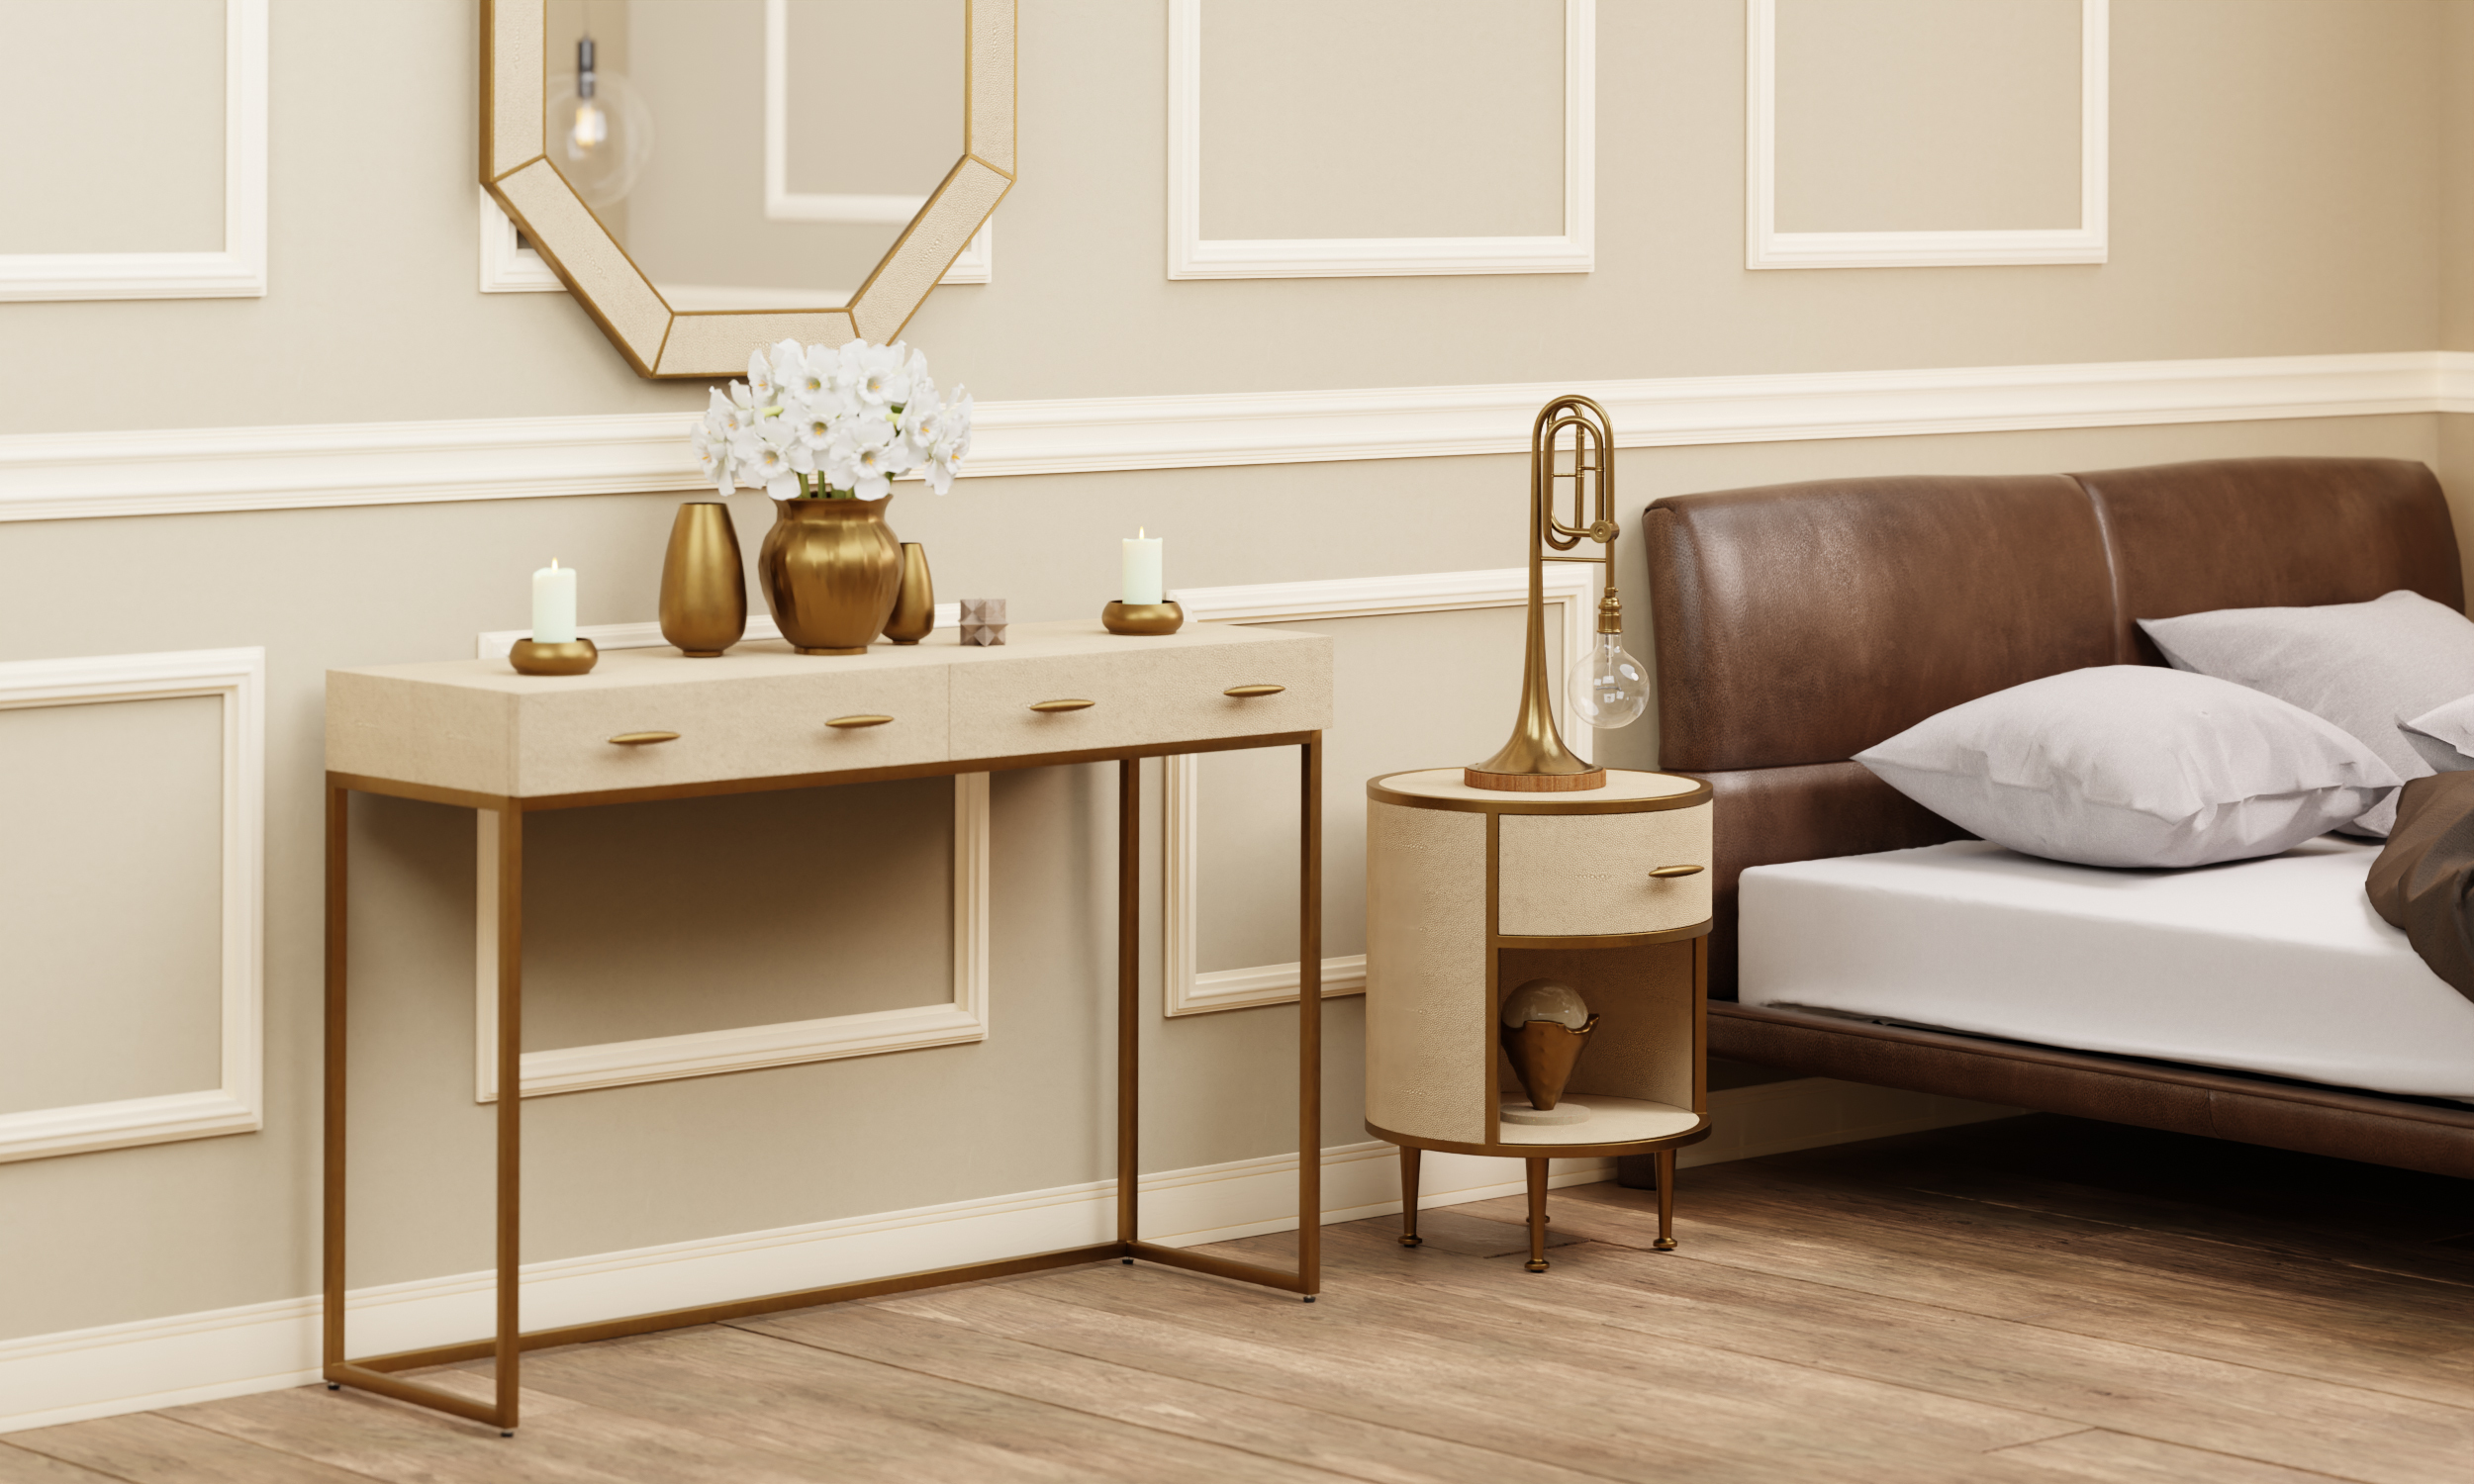 Interior insights – Q&A with home decor & furniture retailer Decoralist